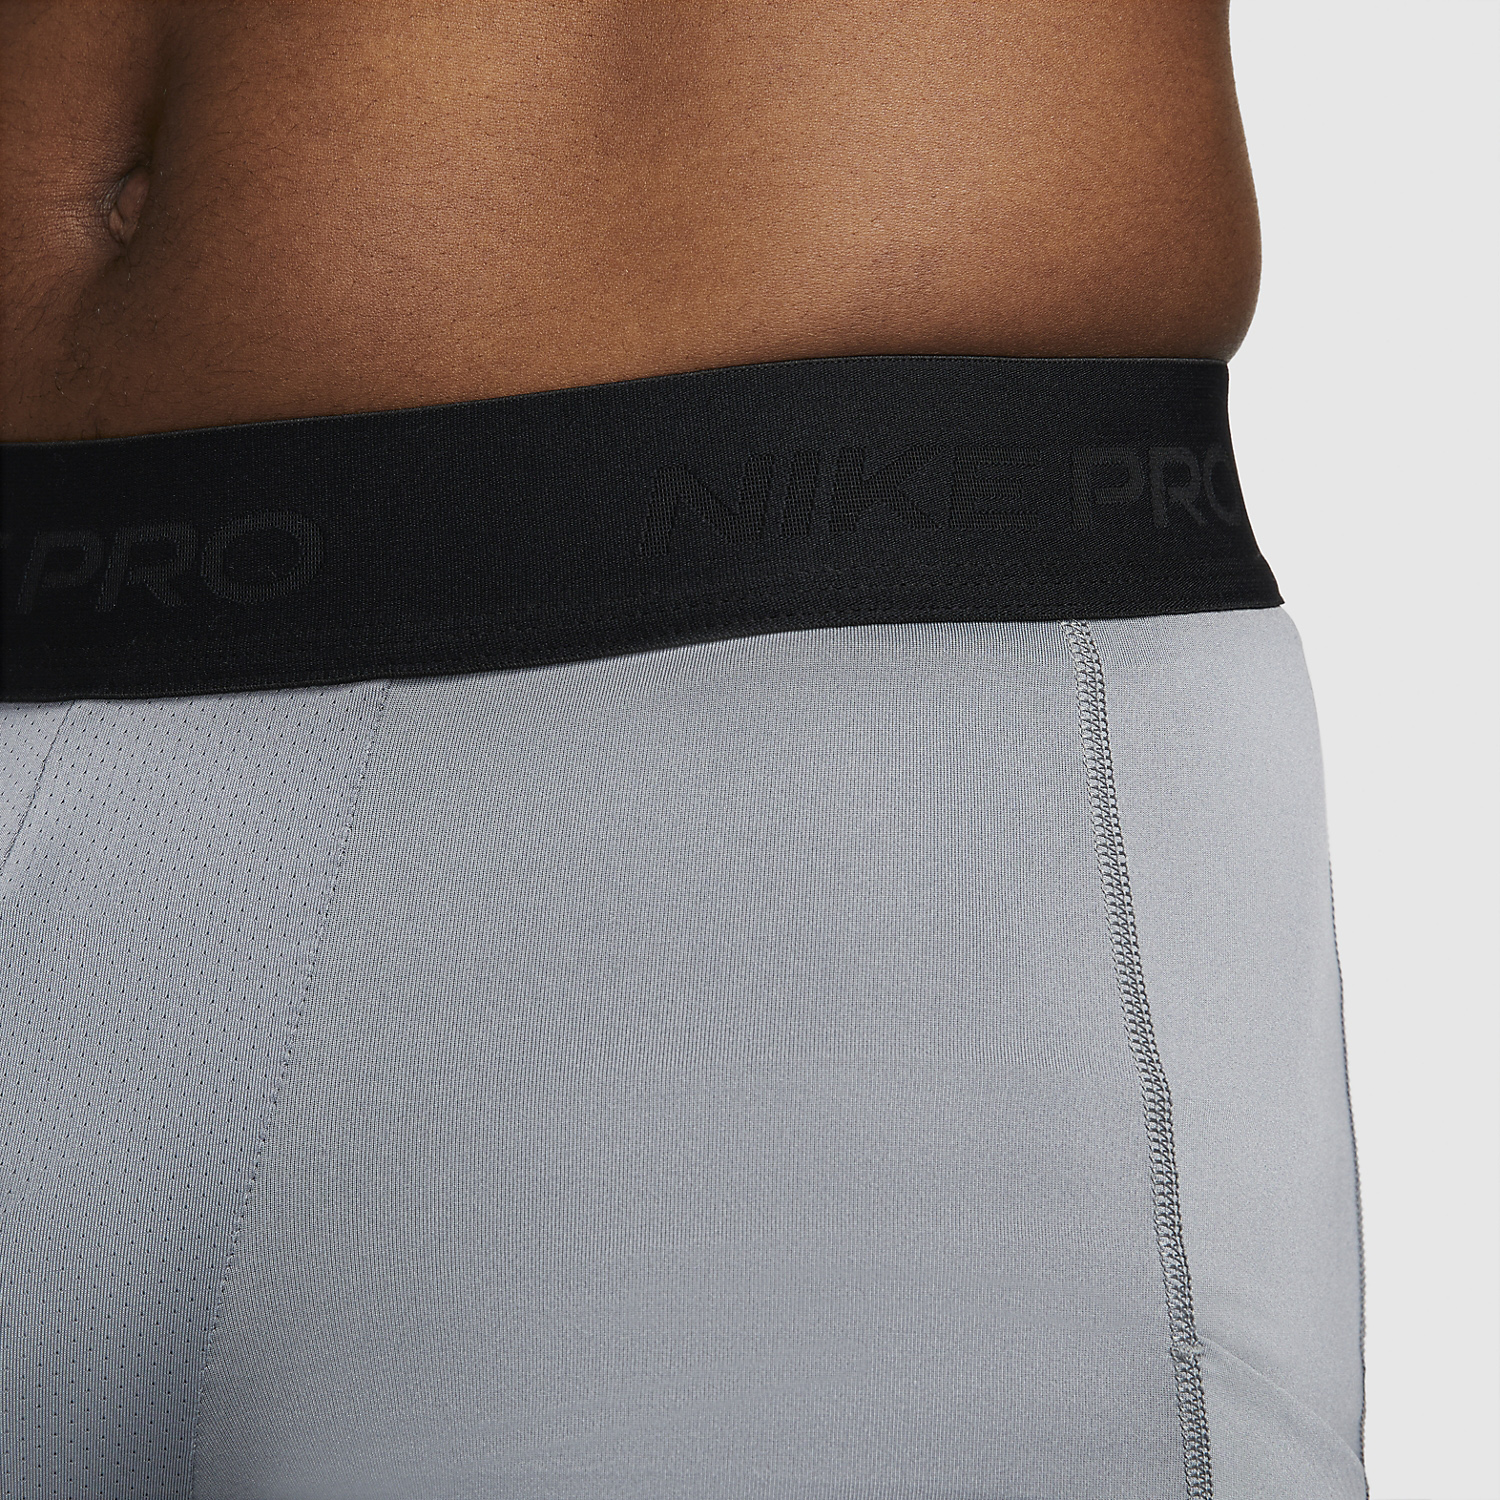 Nike Pro Mallas Cortas - Smoke Grey/Black